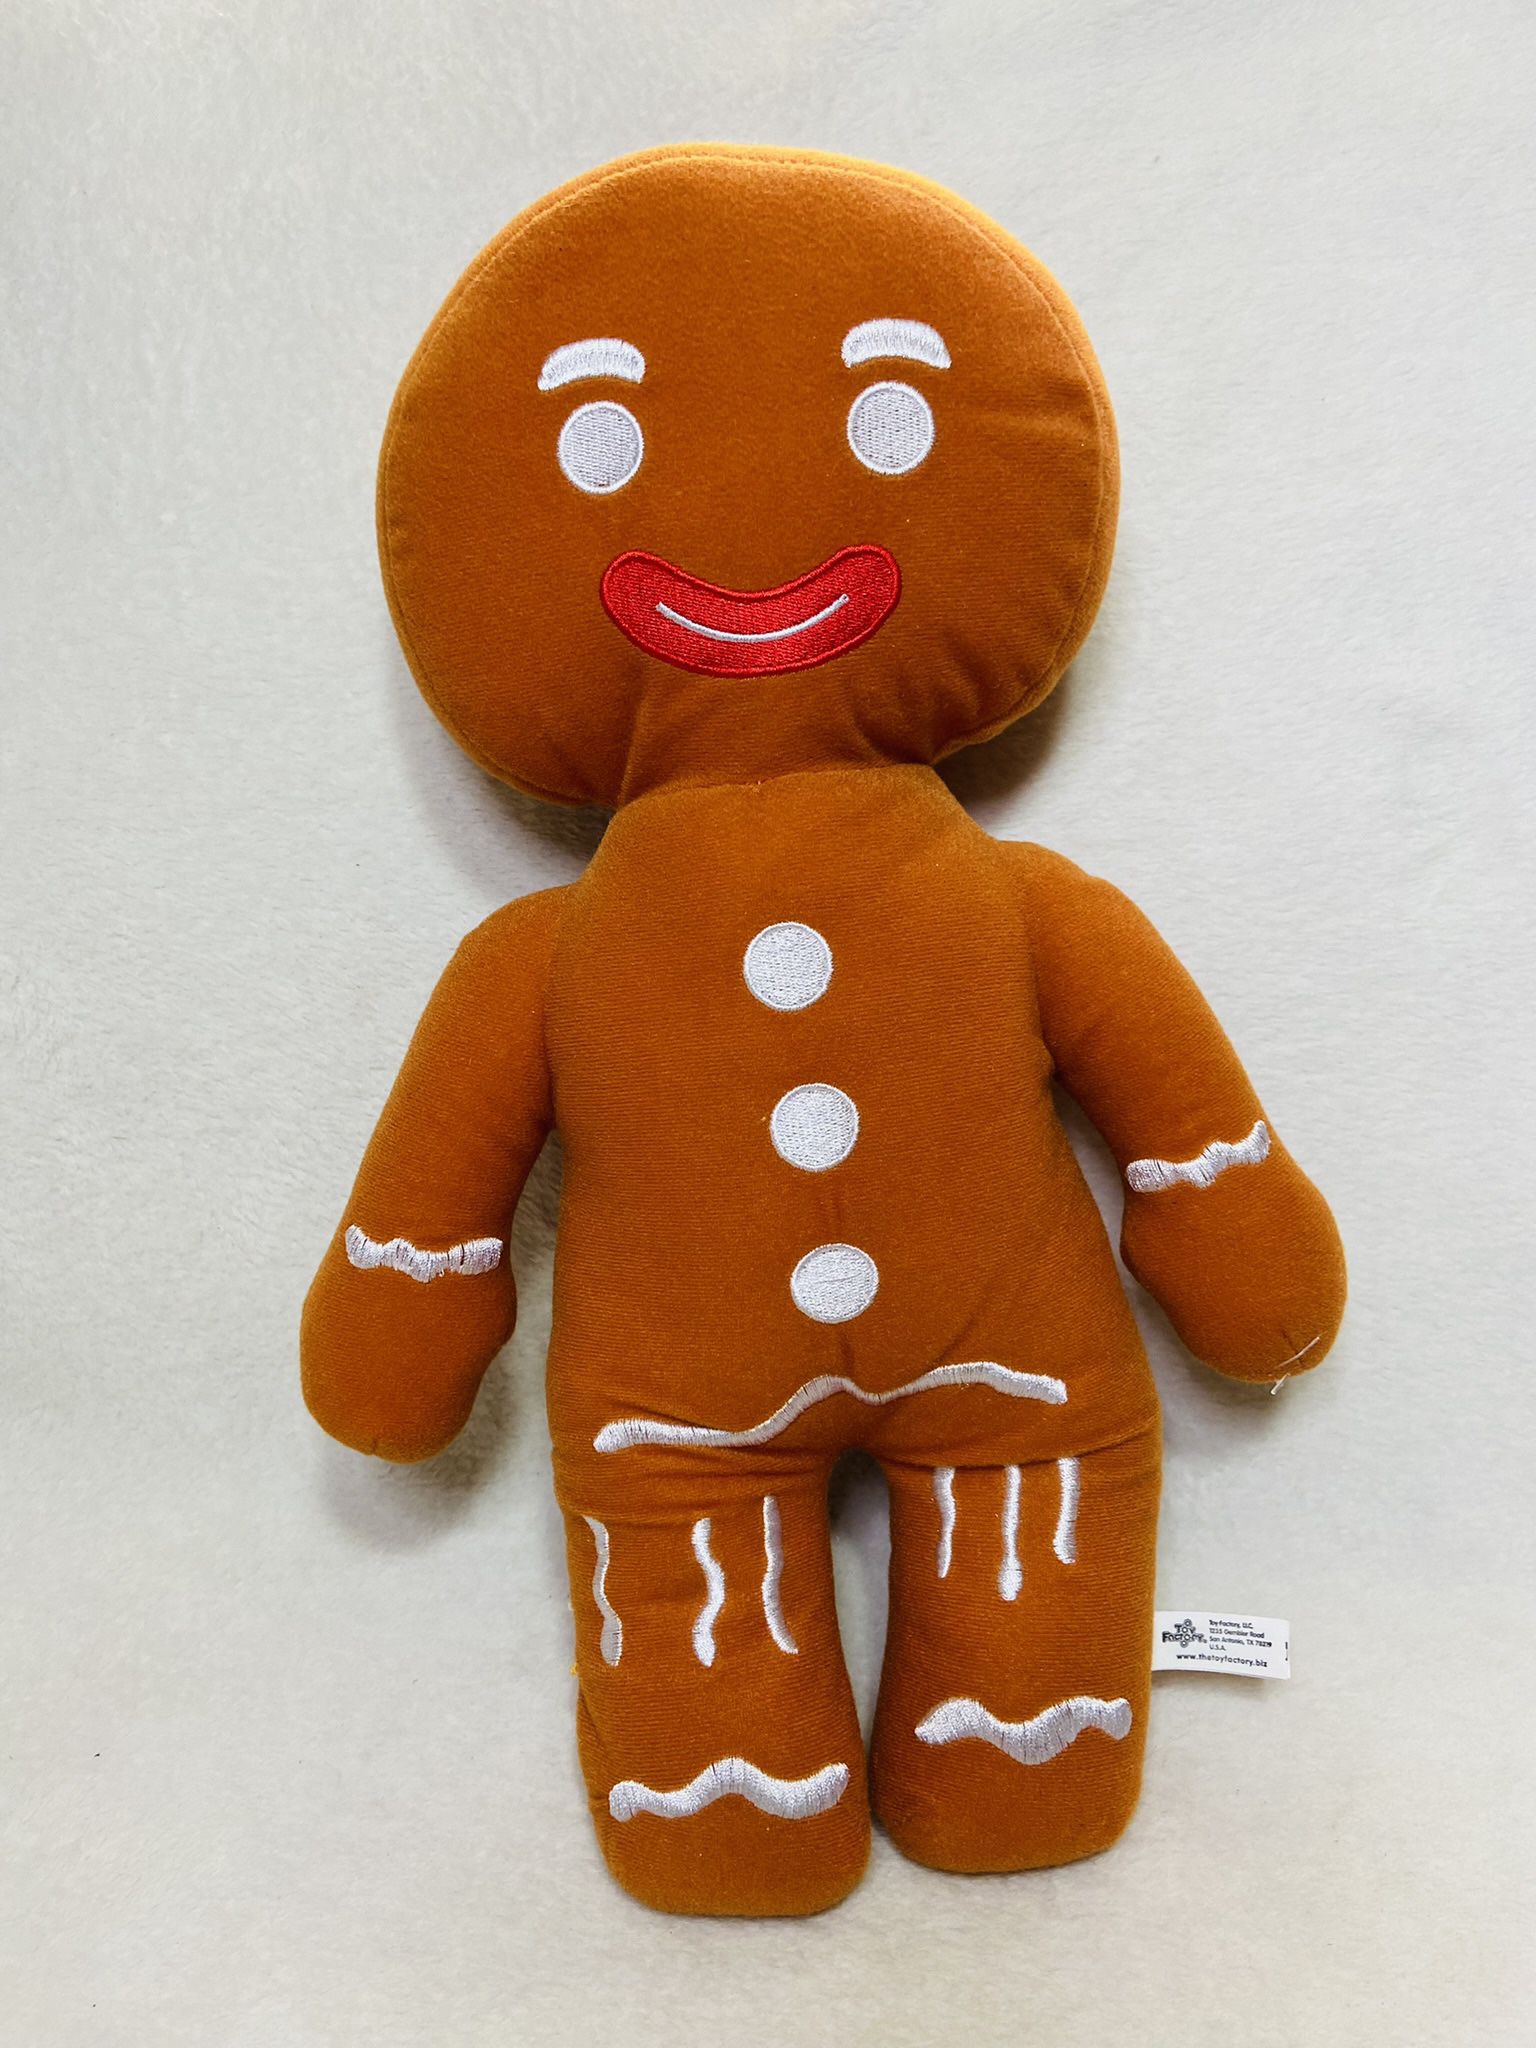 14” KellyToy Shrek Gingerbread Gingy Plush